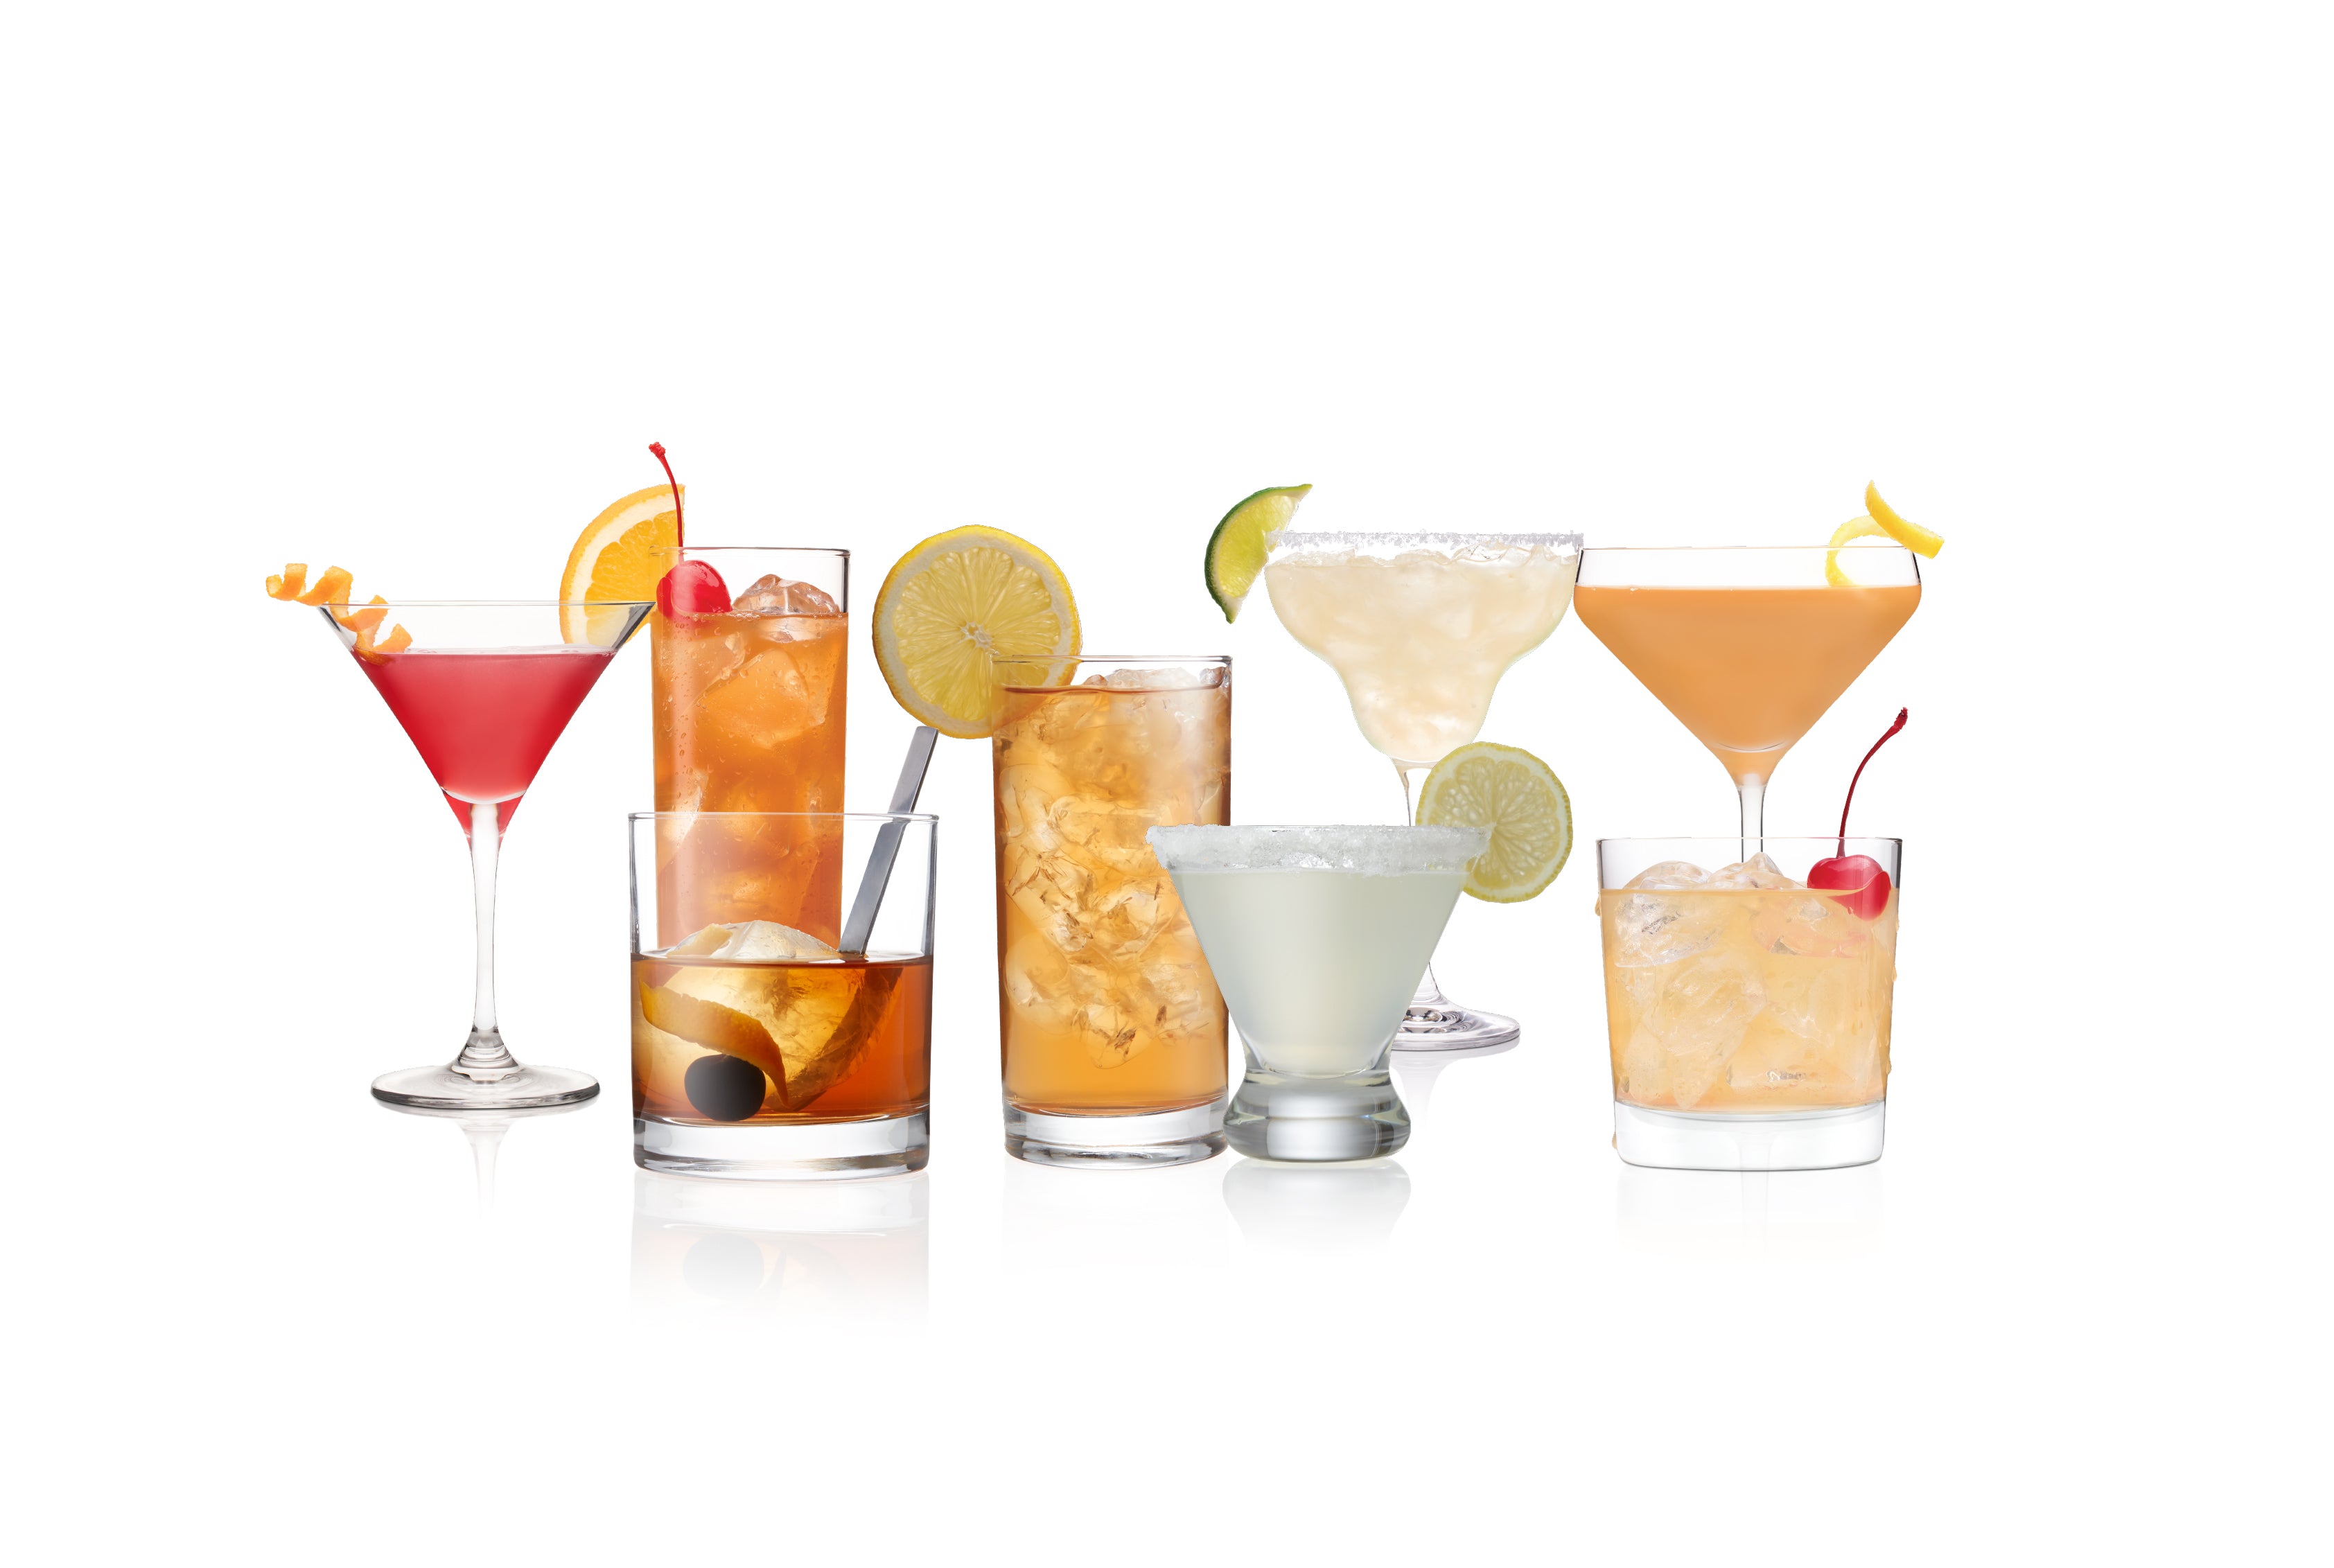 Bartesian Cocktail Glass Sets - Stemless Margarita Drinking  Glassware for Cocktails & Mocktails - Bar Glasses for Martini, Margarita,  Pina Colada, Whiskey Sour, Old Fashioned - Set of 2: Margarita Glasses